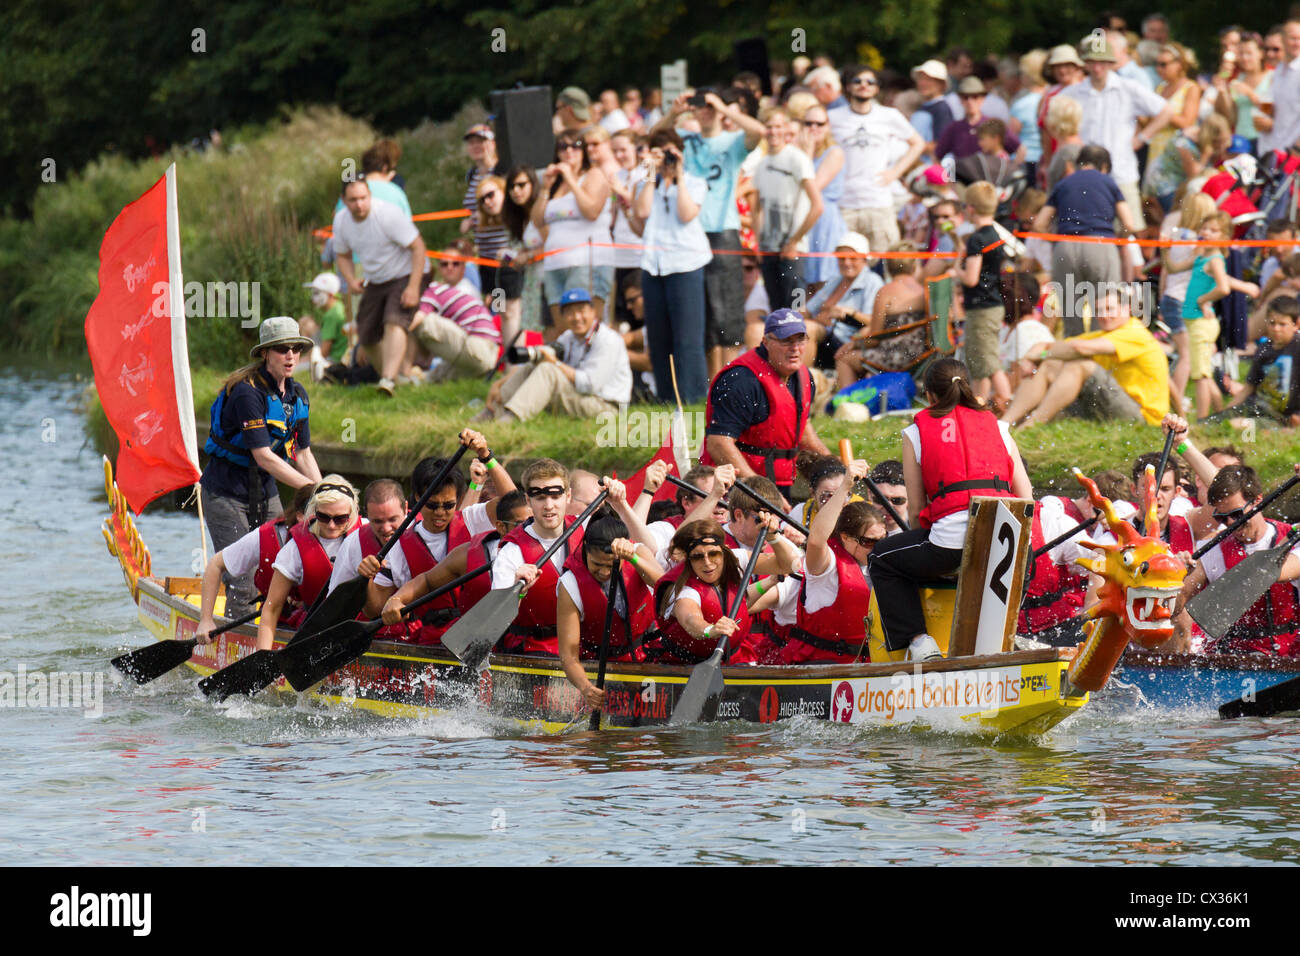 Dragon boat Festival at Abingdon-on-Thames, Oxfordshire 2012 -6 Stock Photo